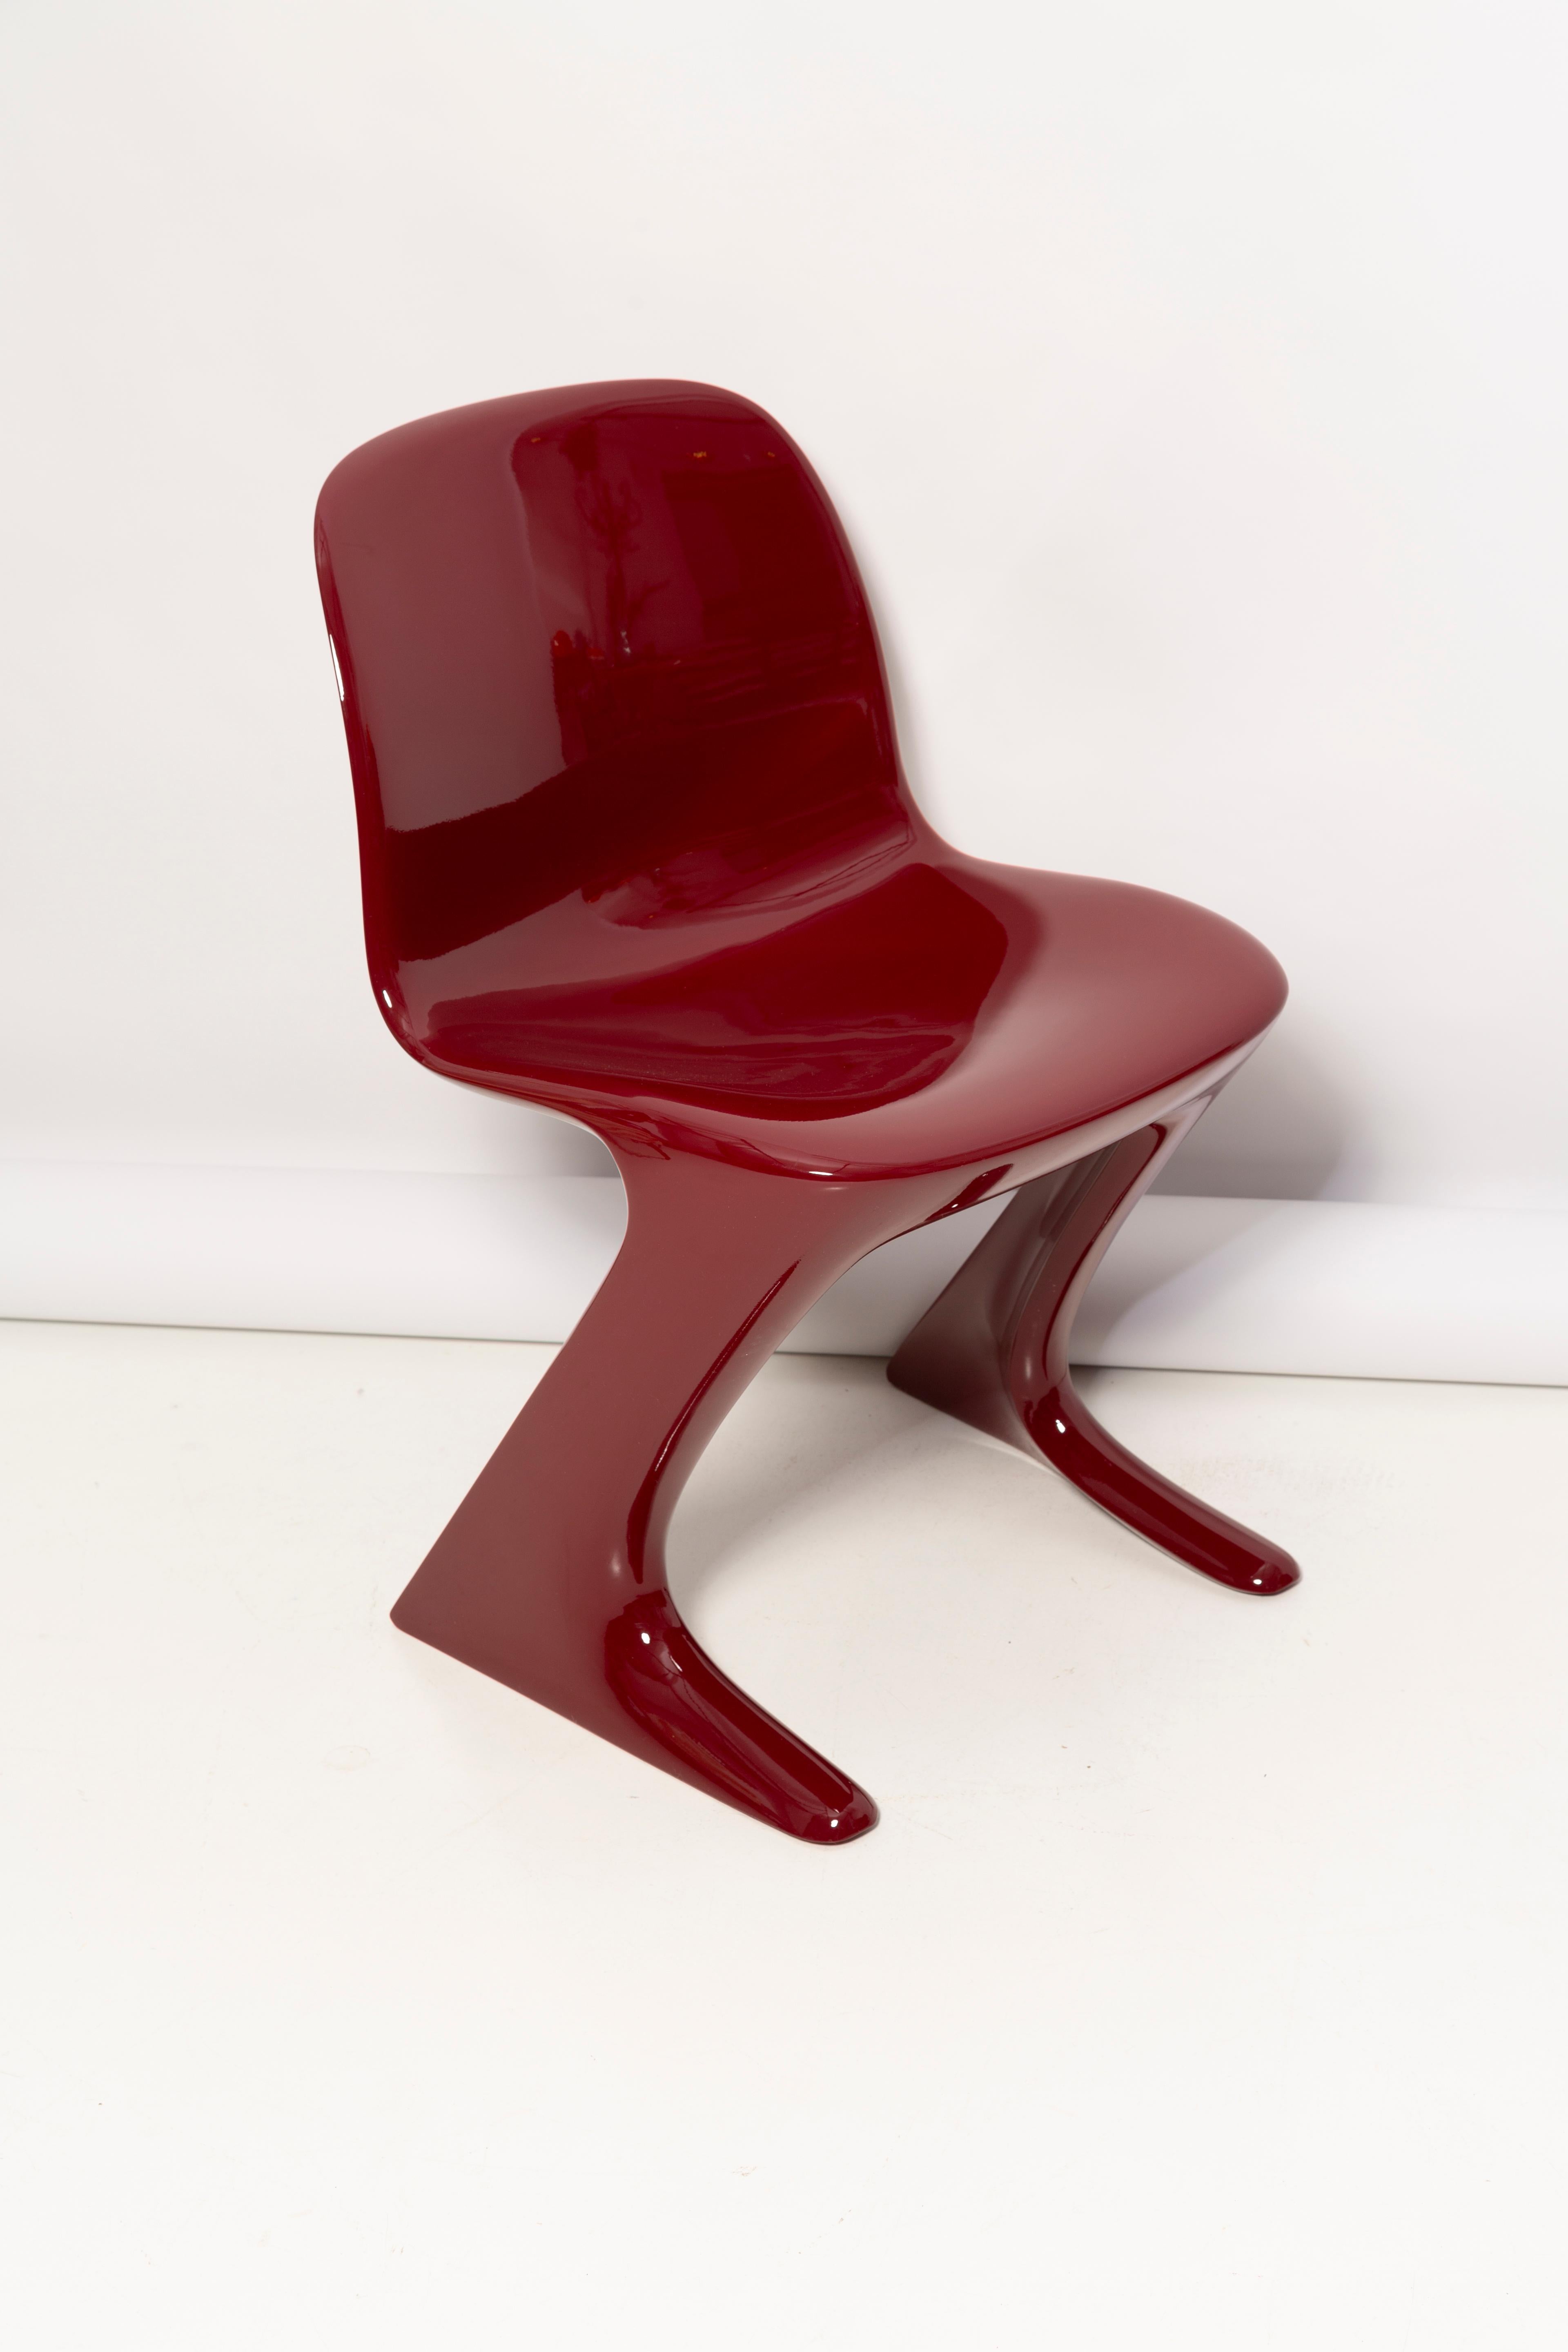 Dark Red Wine Kangaroo Chair Designed by Ernst Moeckl, Germany, 1968 In Excellent Condition For Sale In 05-080 Hornowek, PL